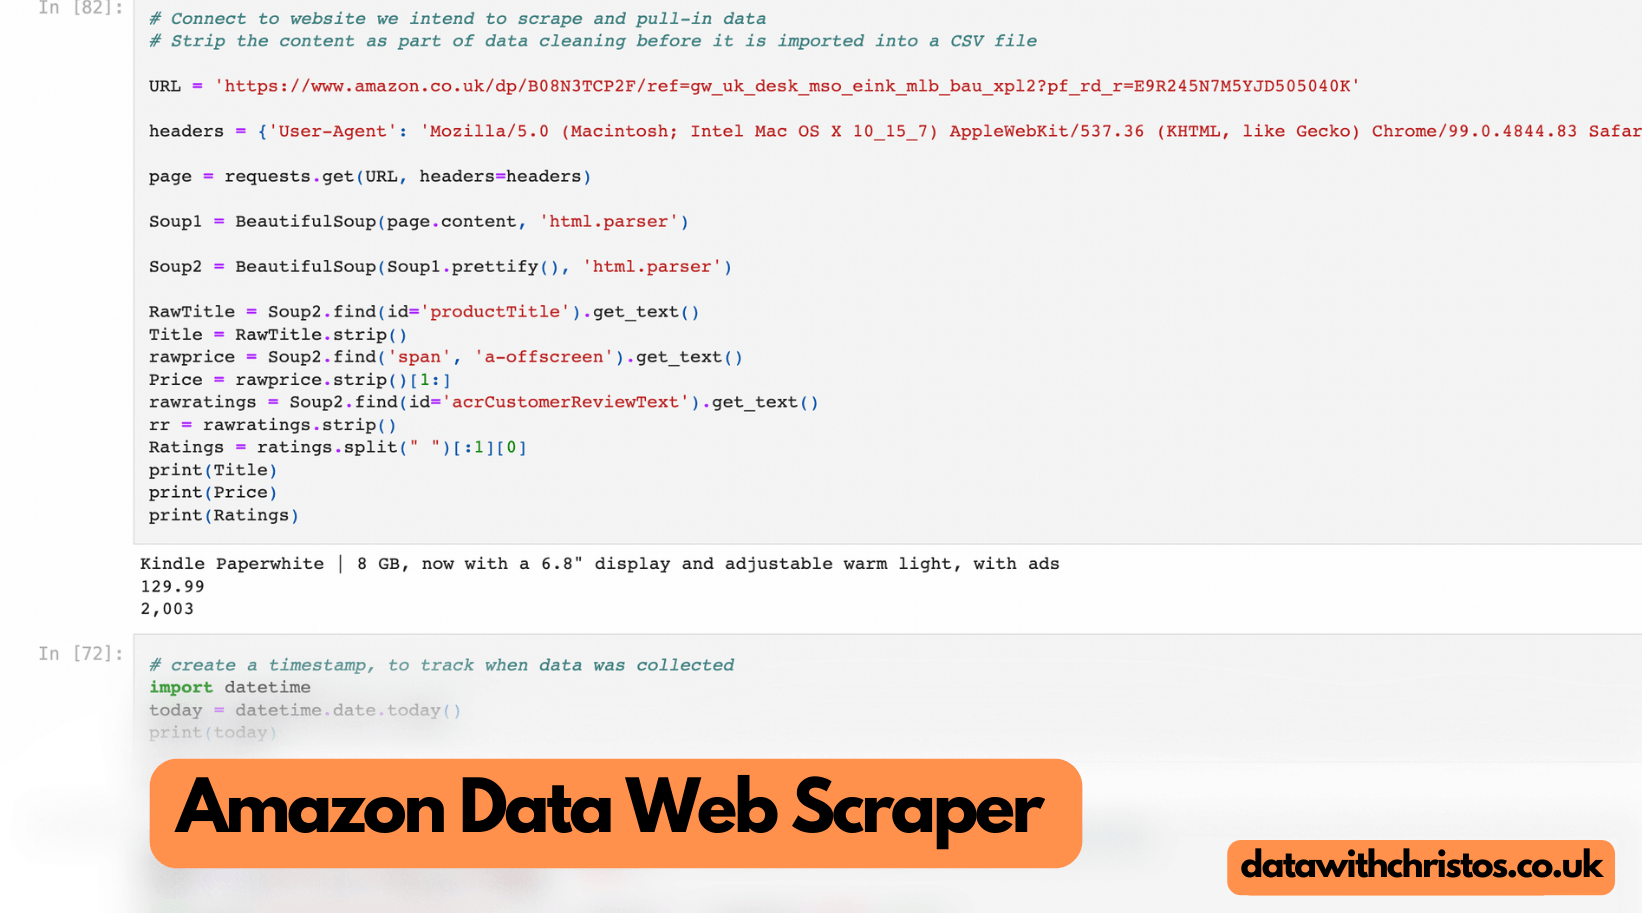 Amazon Data Web Scraper